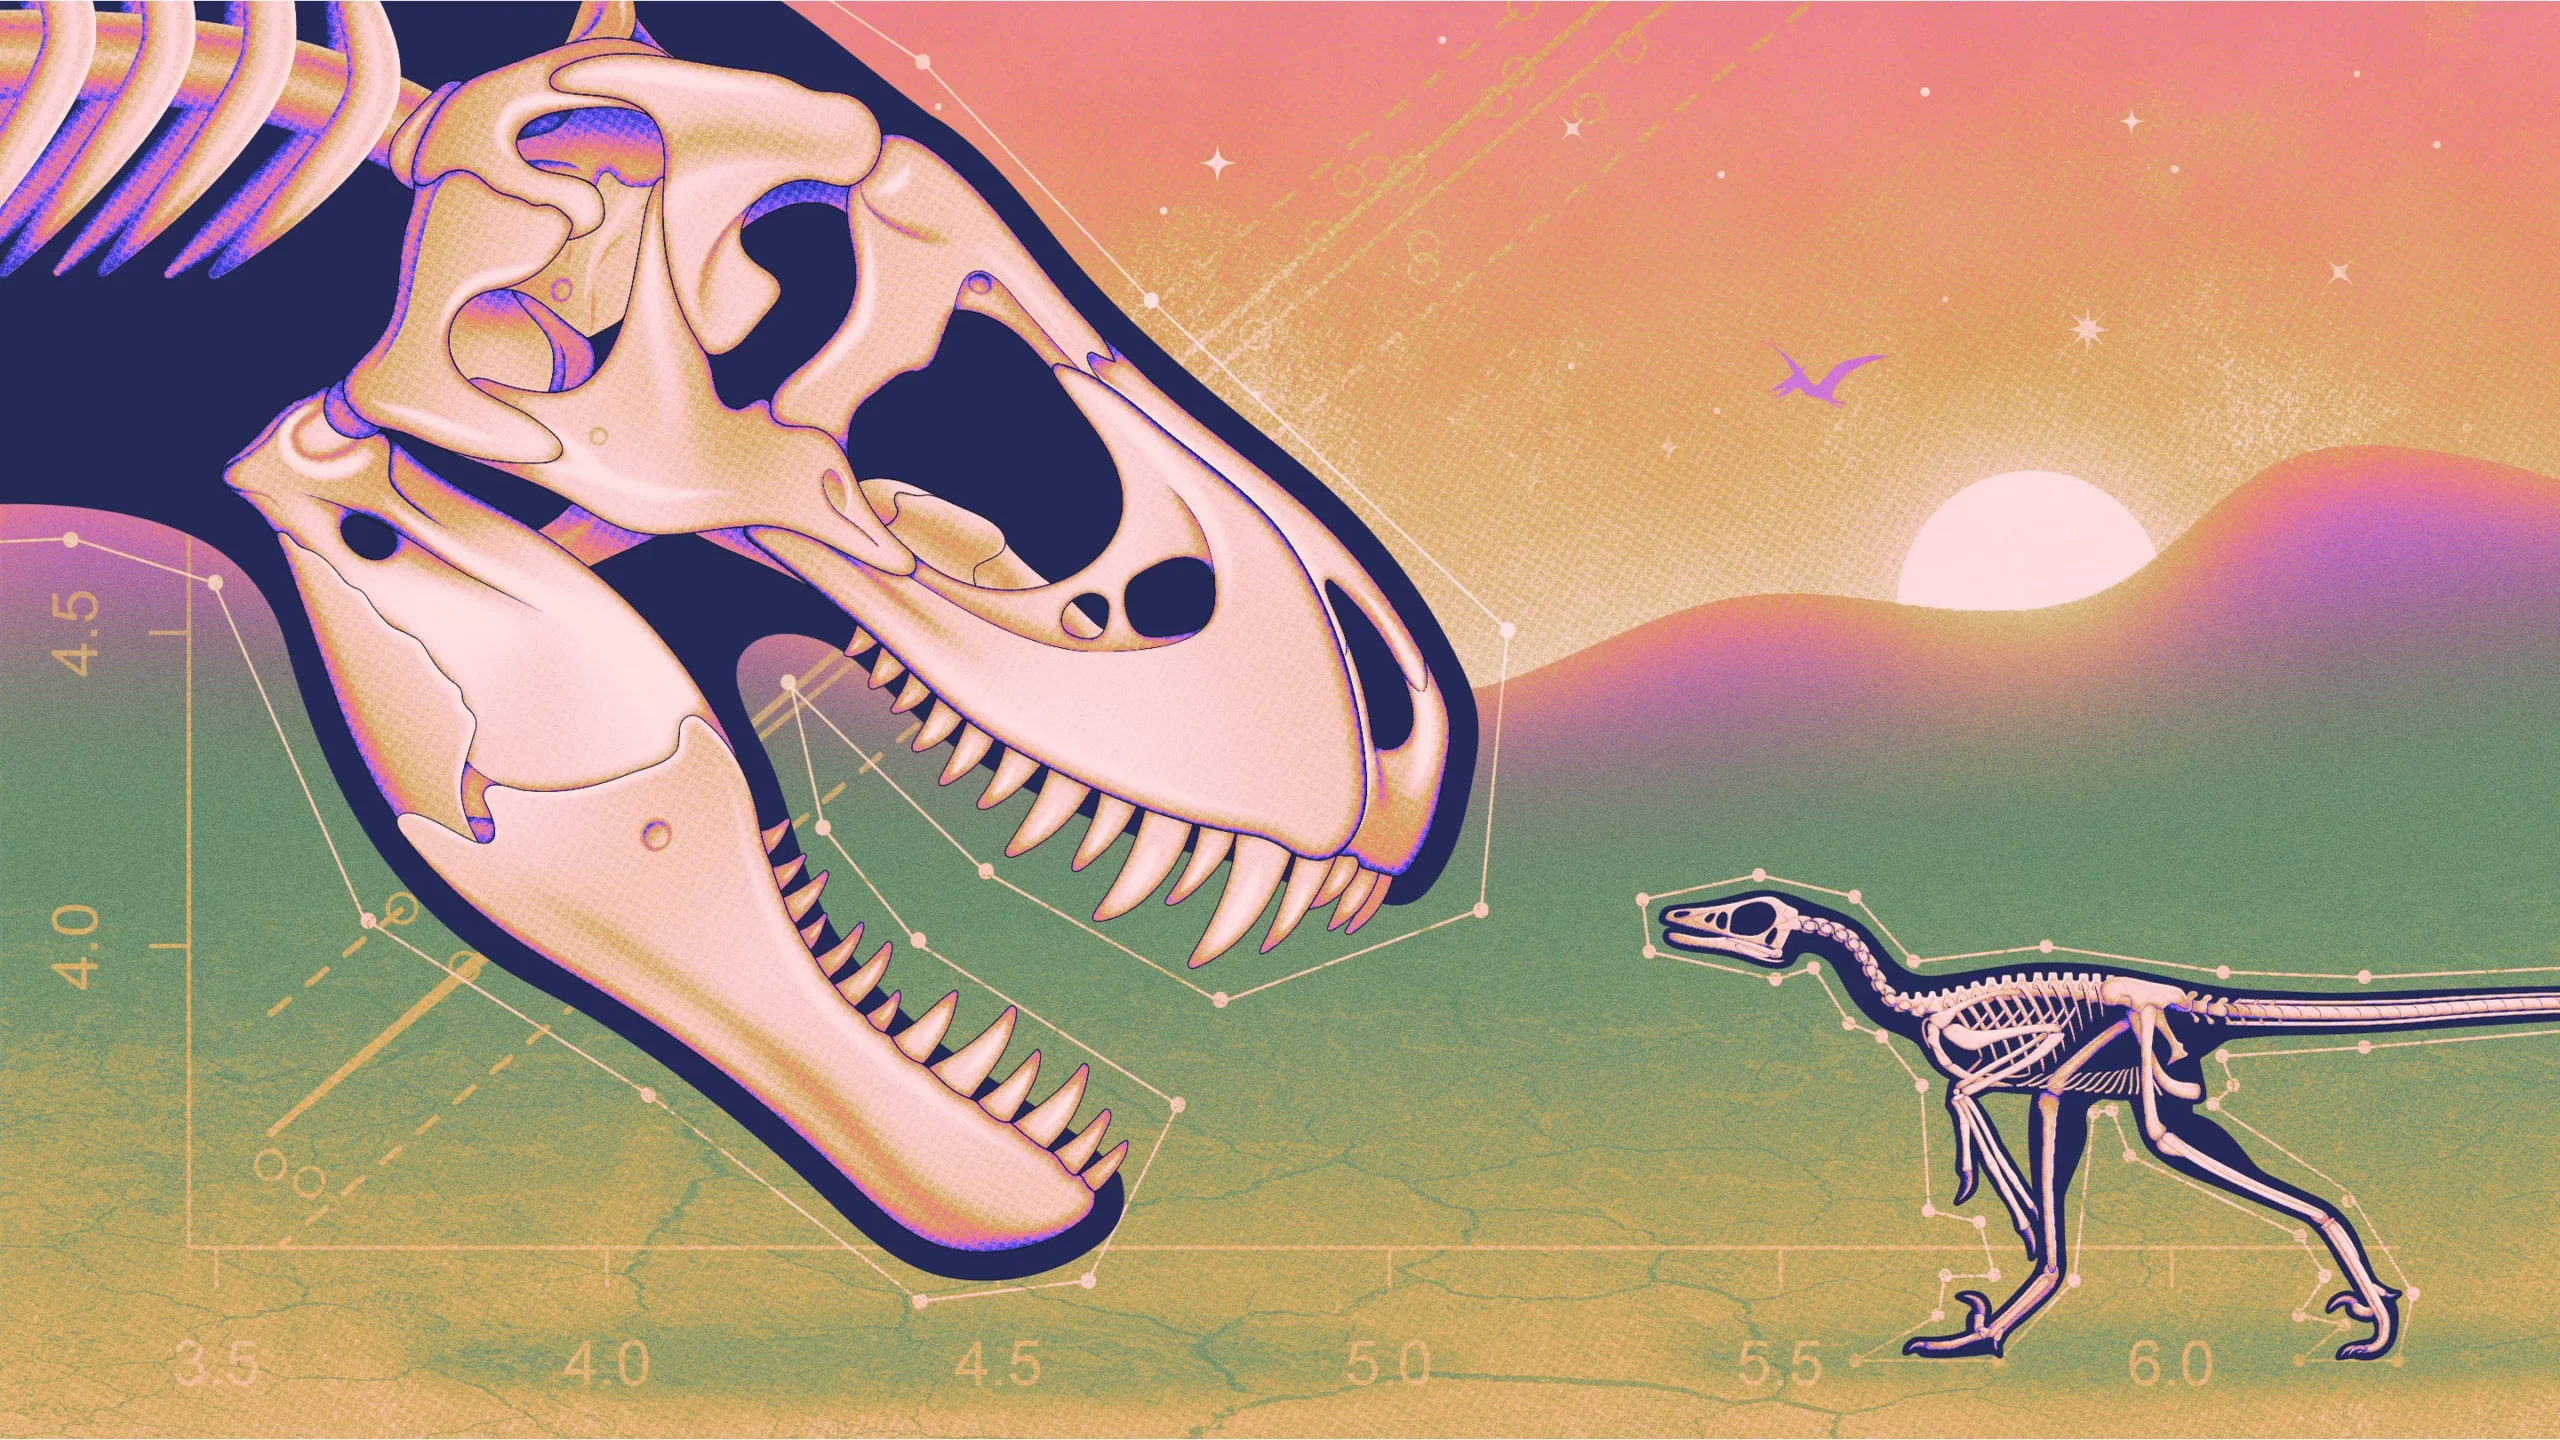 Dinosaur Bone Study Reveals That Not All Giants Grew Alike